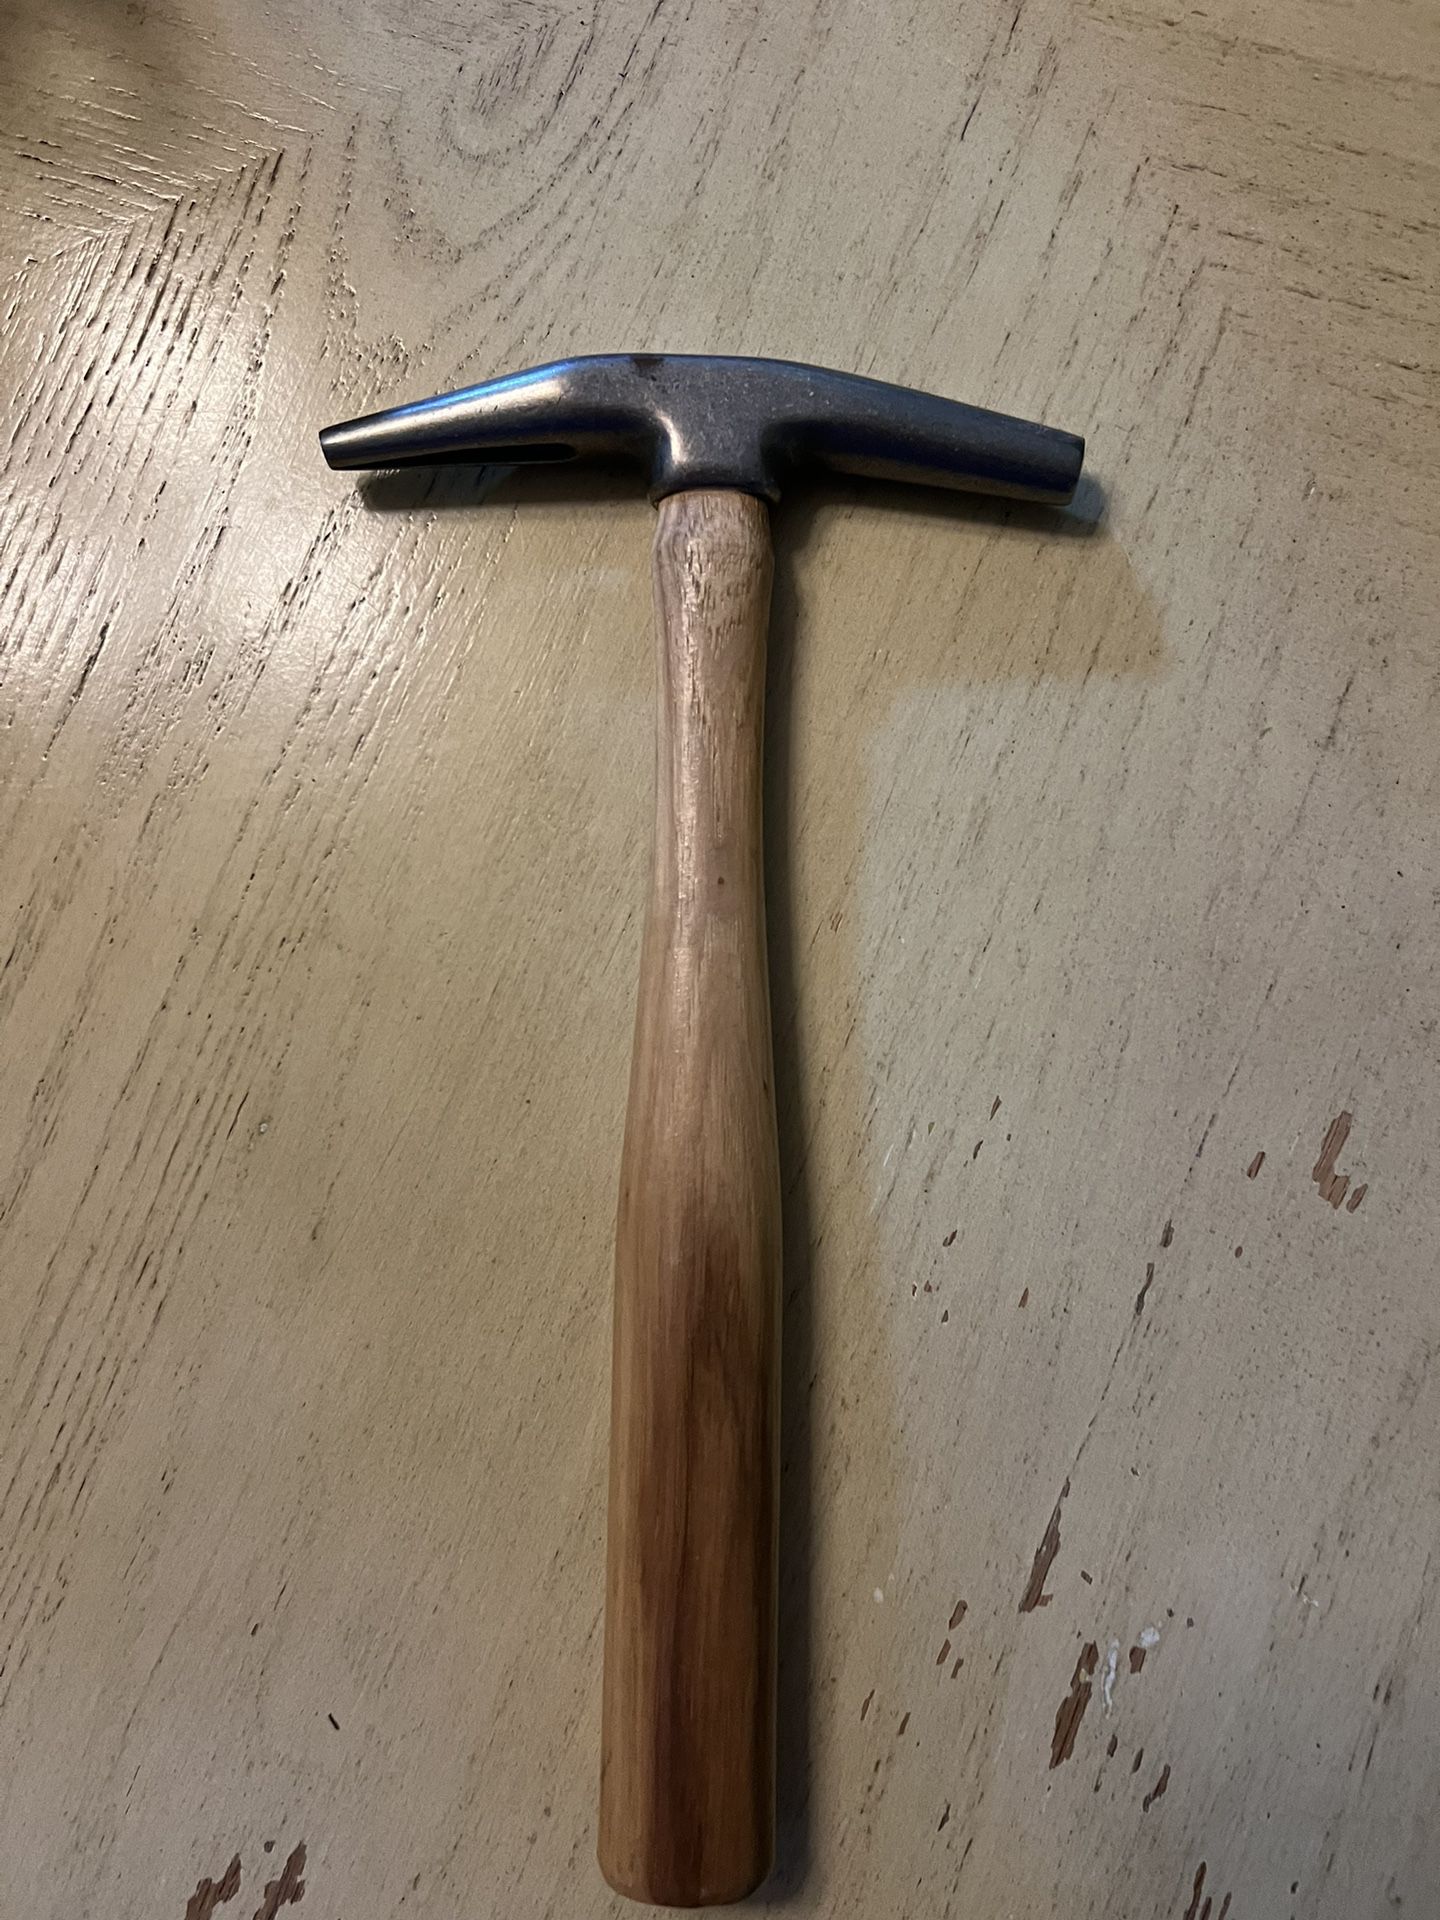 Vintage Osborne Tack Hammer With Split Head